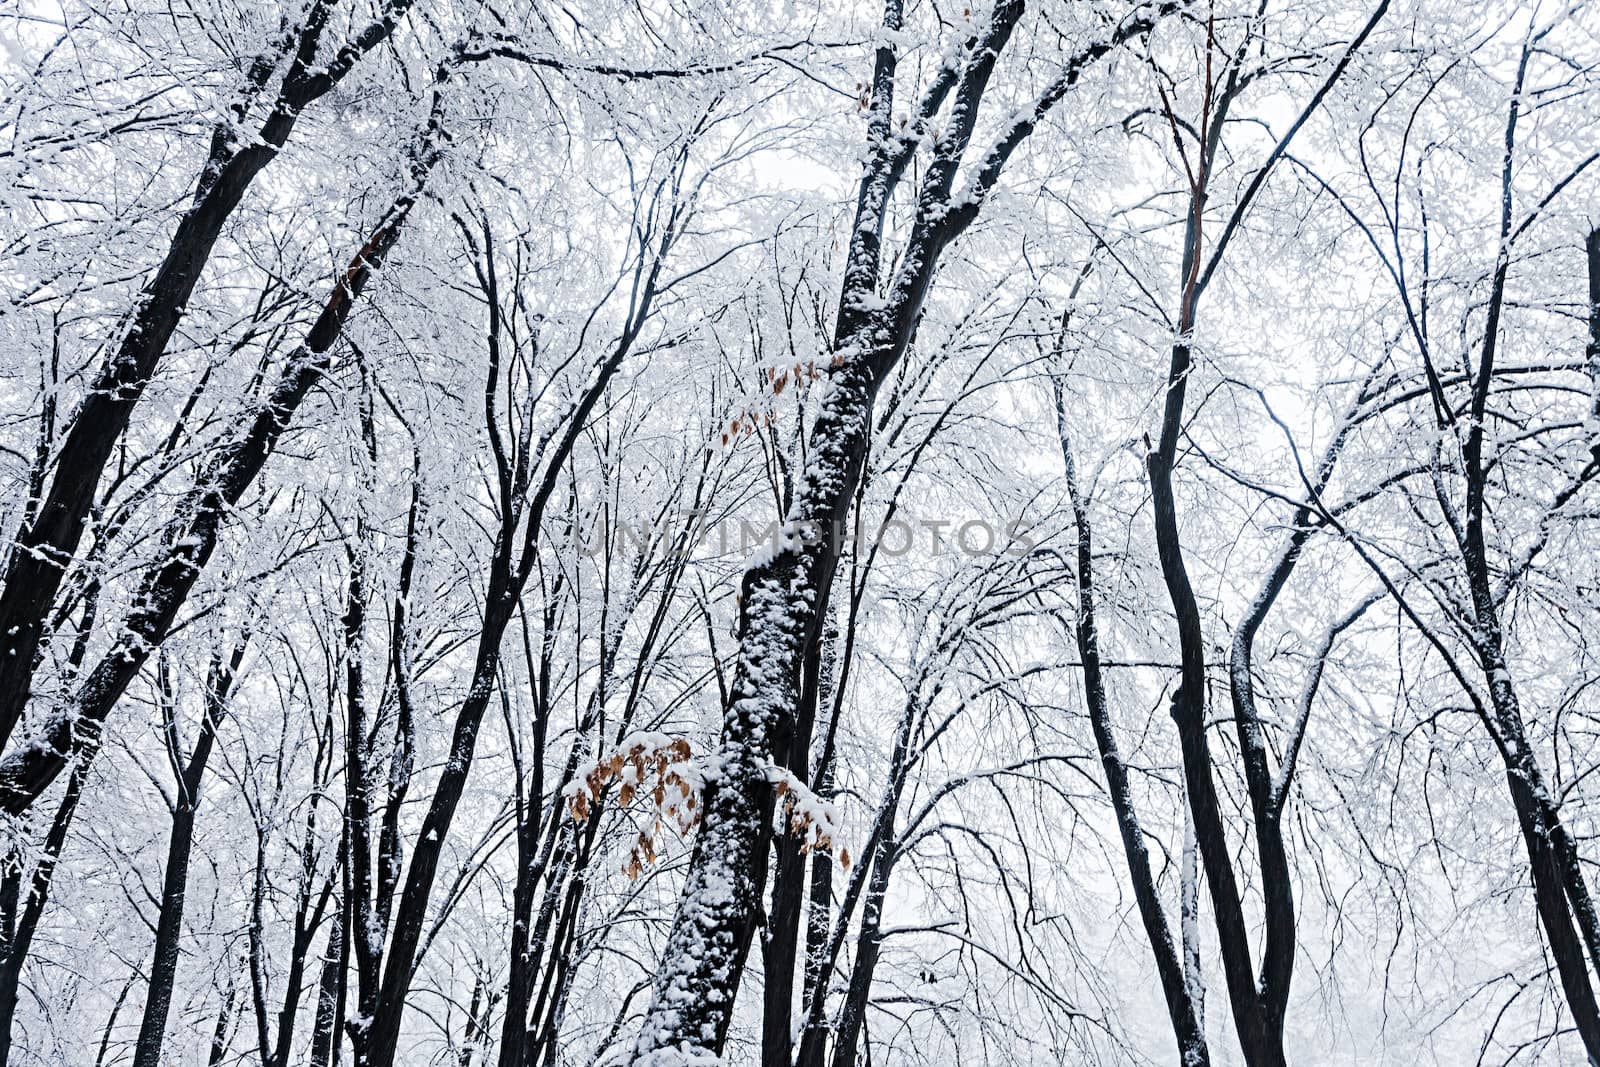  winter forest by palinchak